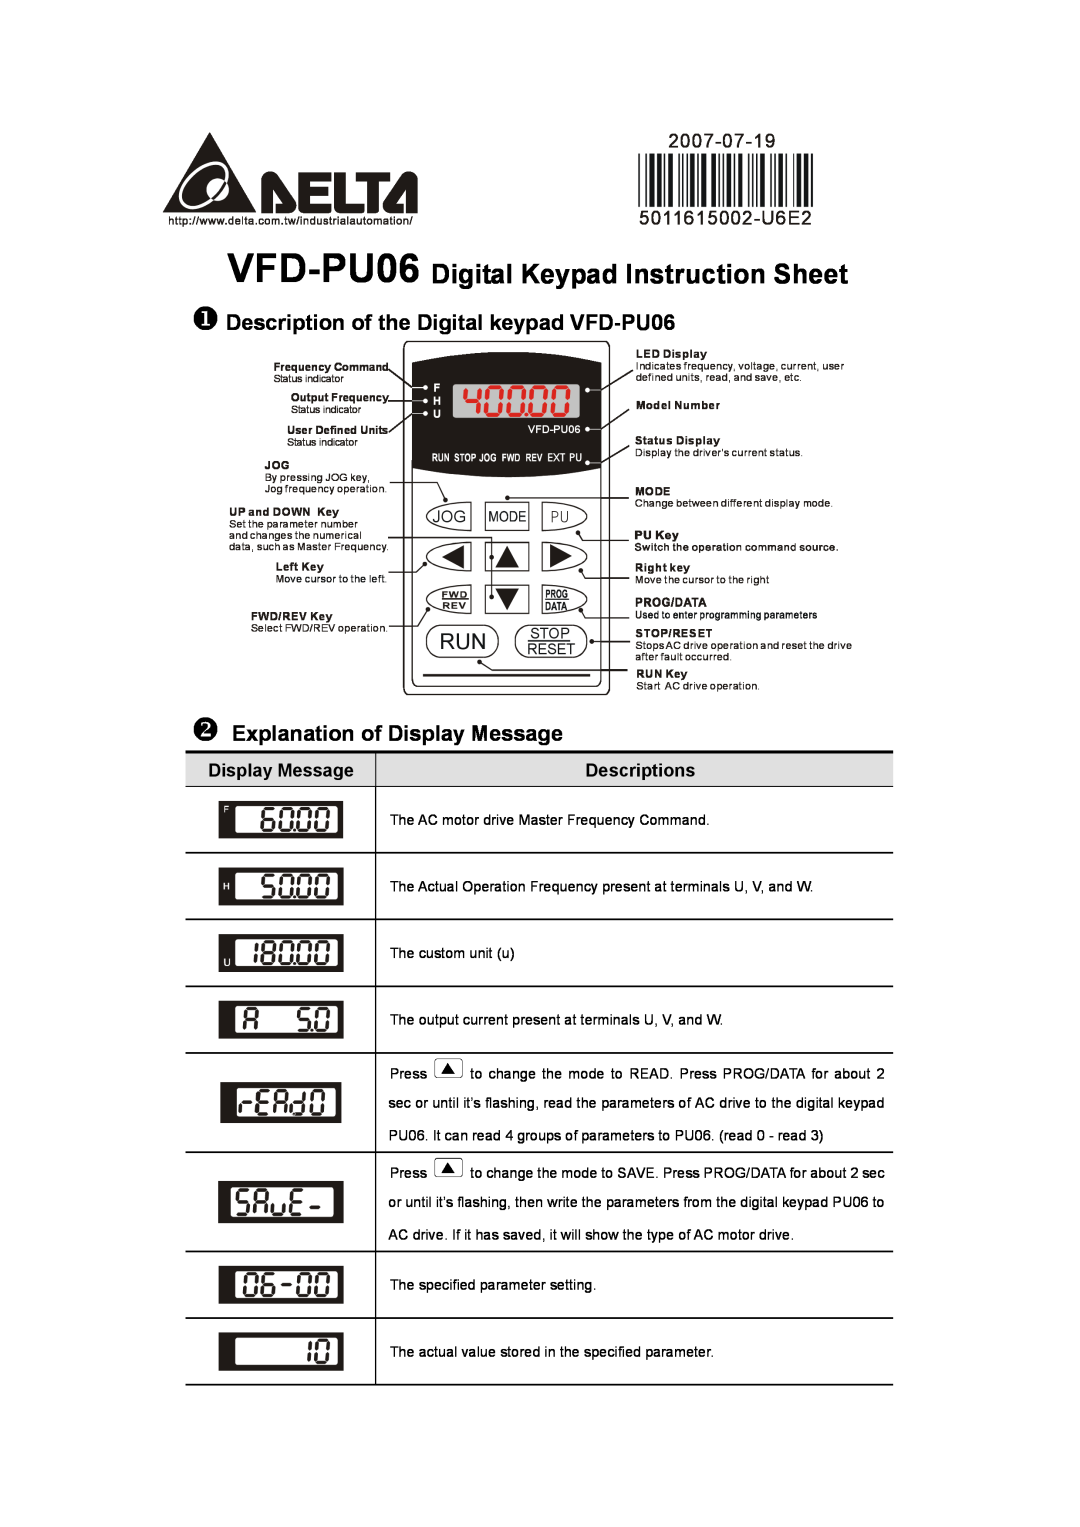 Delta Electronics instruction sheet X Description of the Digital keypad VFD-PU06, Y Explanation of Display Message 